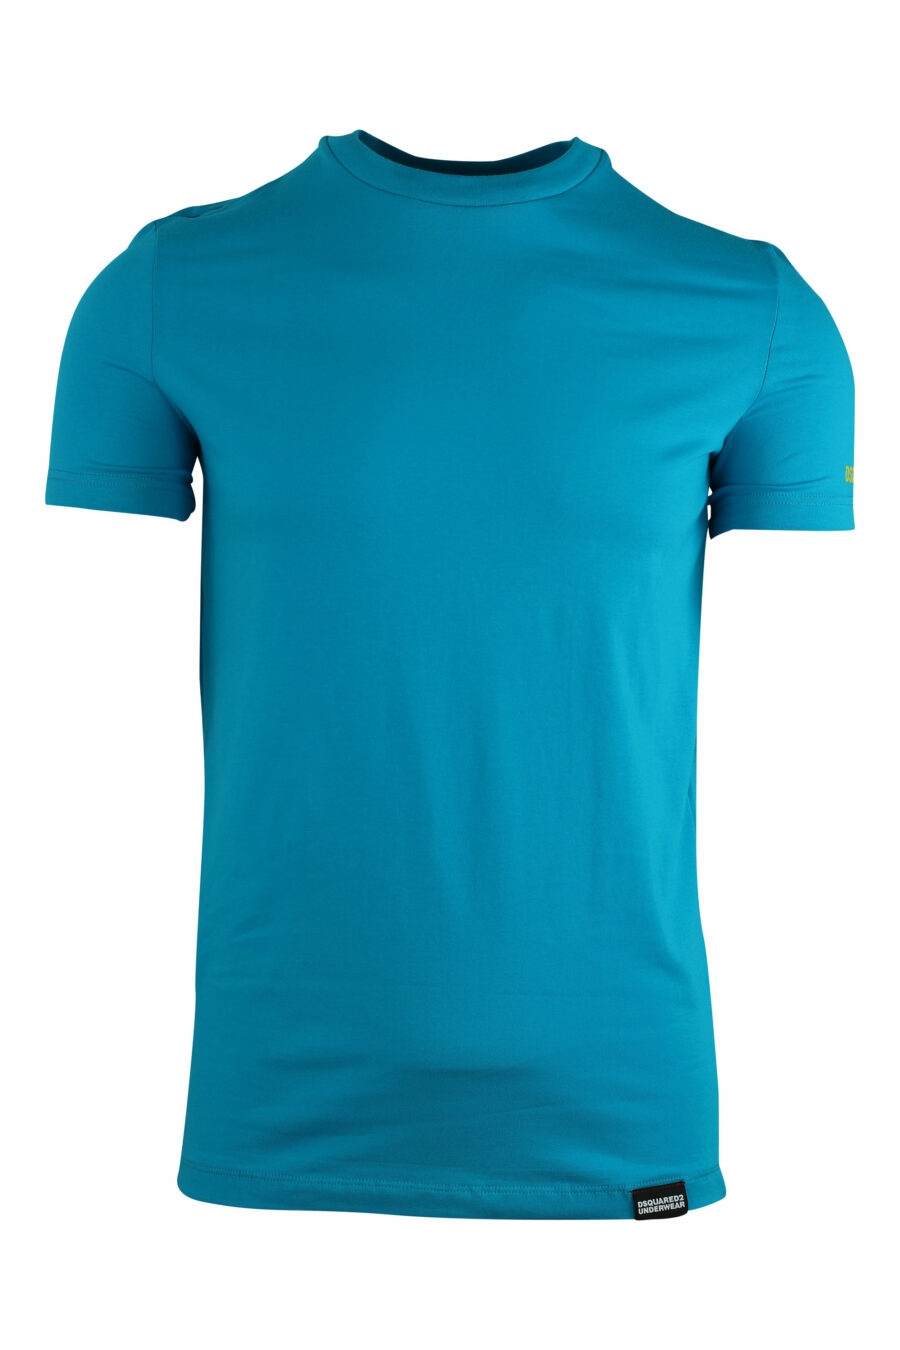 Hellblaues T-Shirt mit gelbem Mini-Logo am Ärmel - IMG 1185